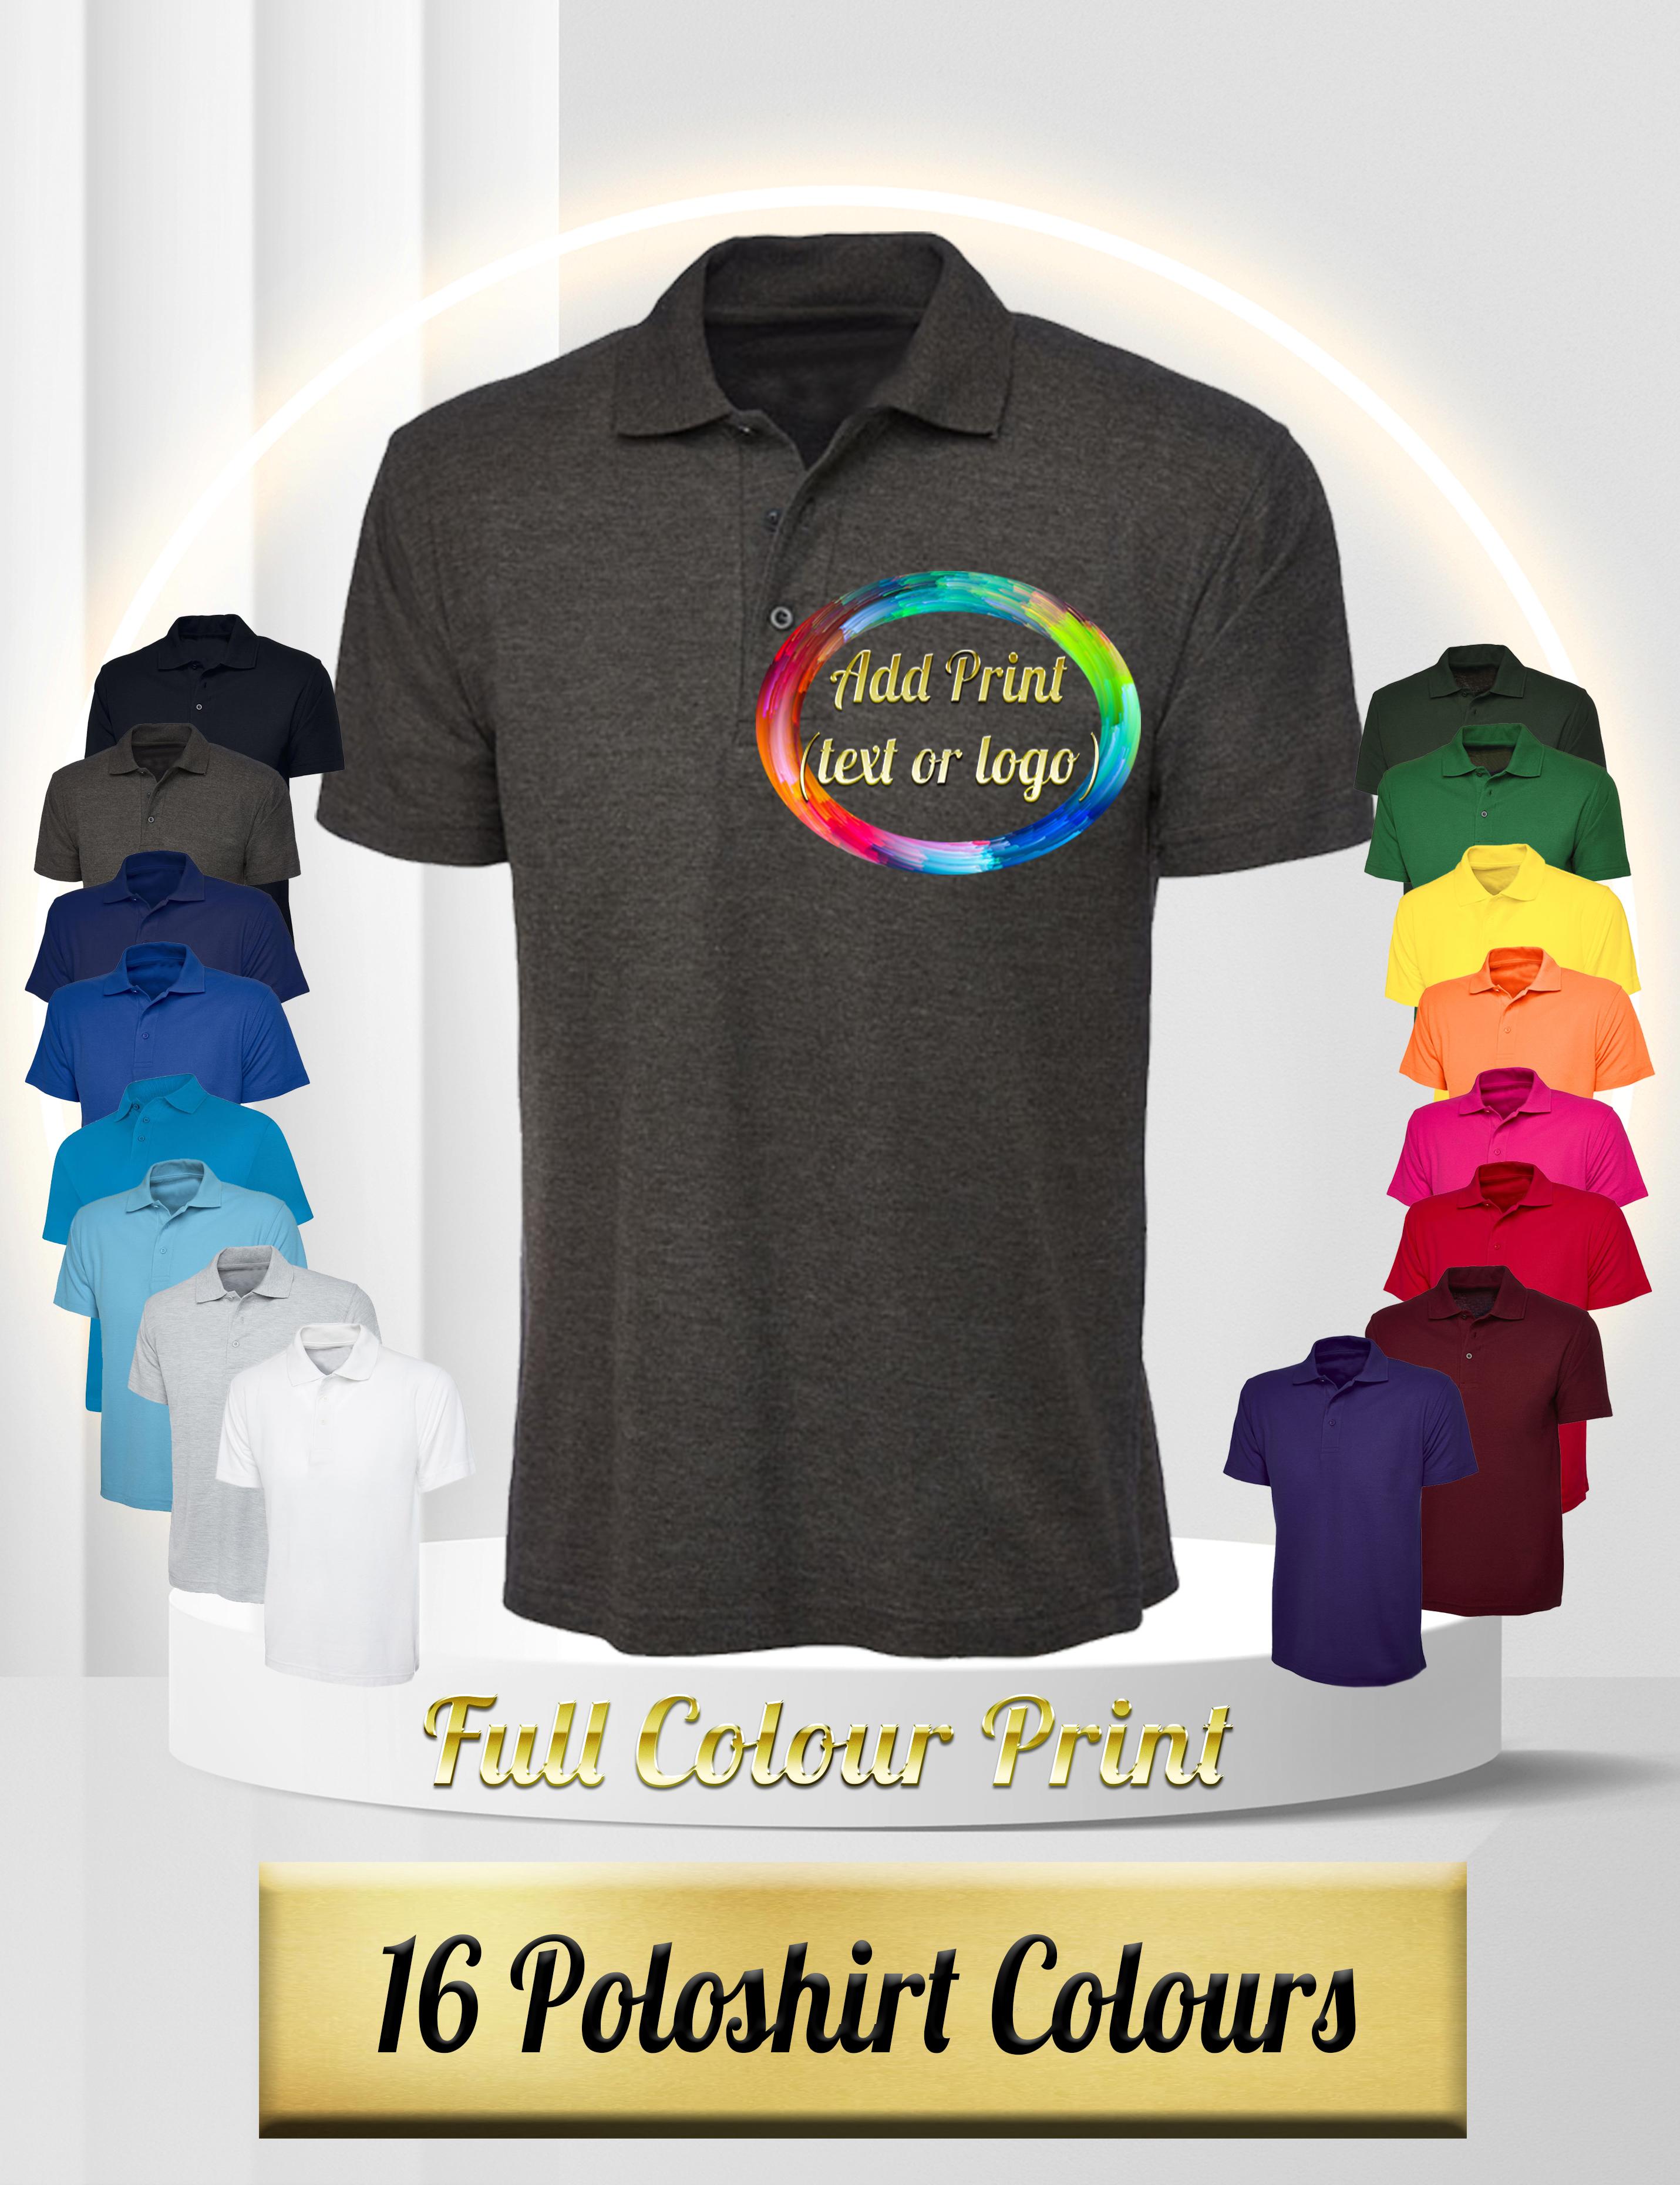 Full Colour Printed Polo Shirt